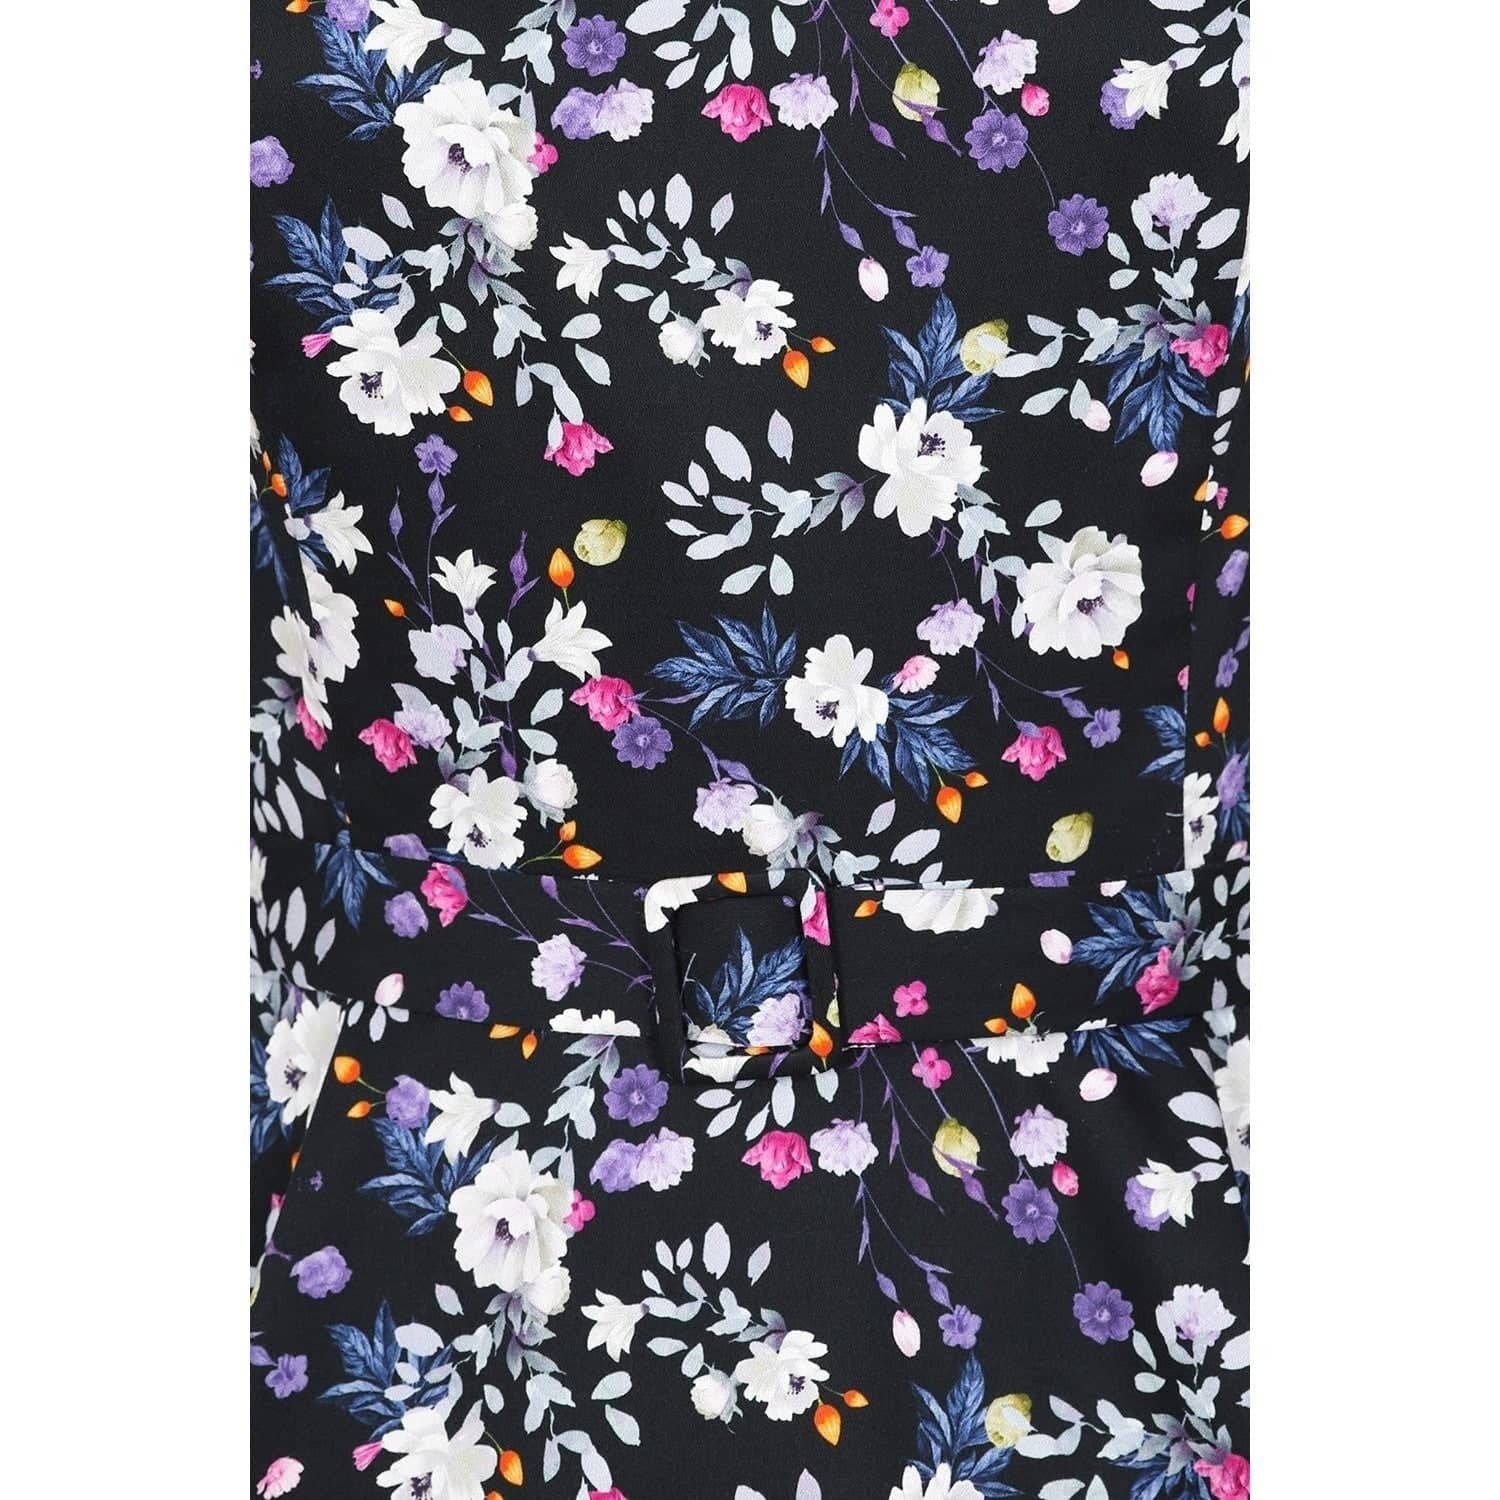 Black Multi Floral Print 3/4 Sleeve 50s Swing Dress